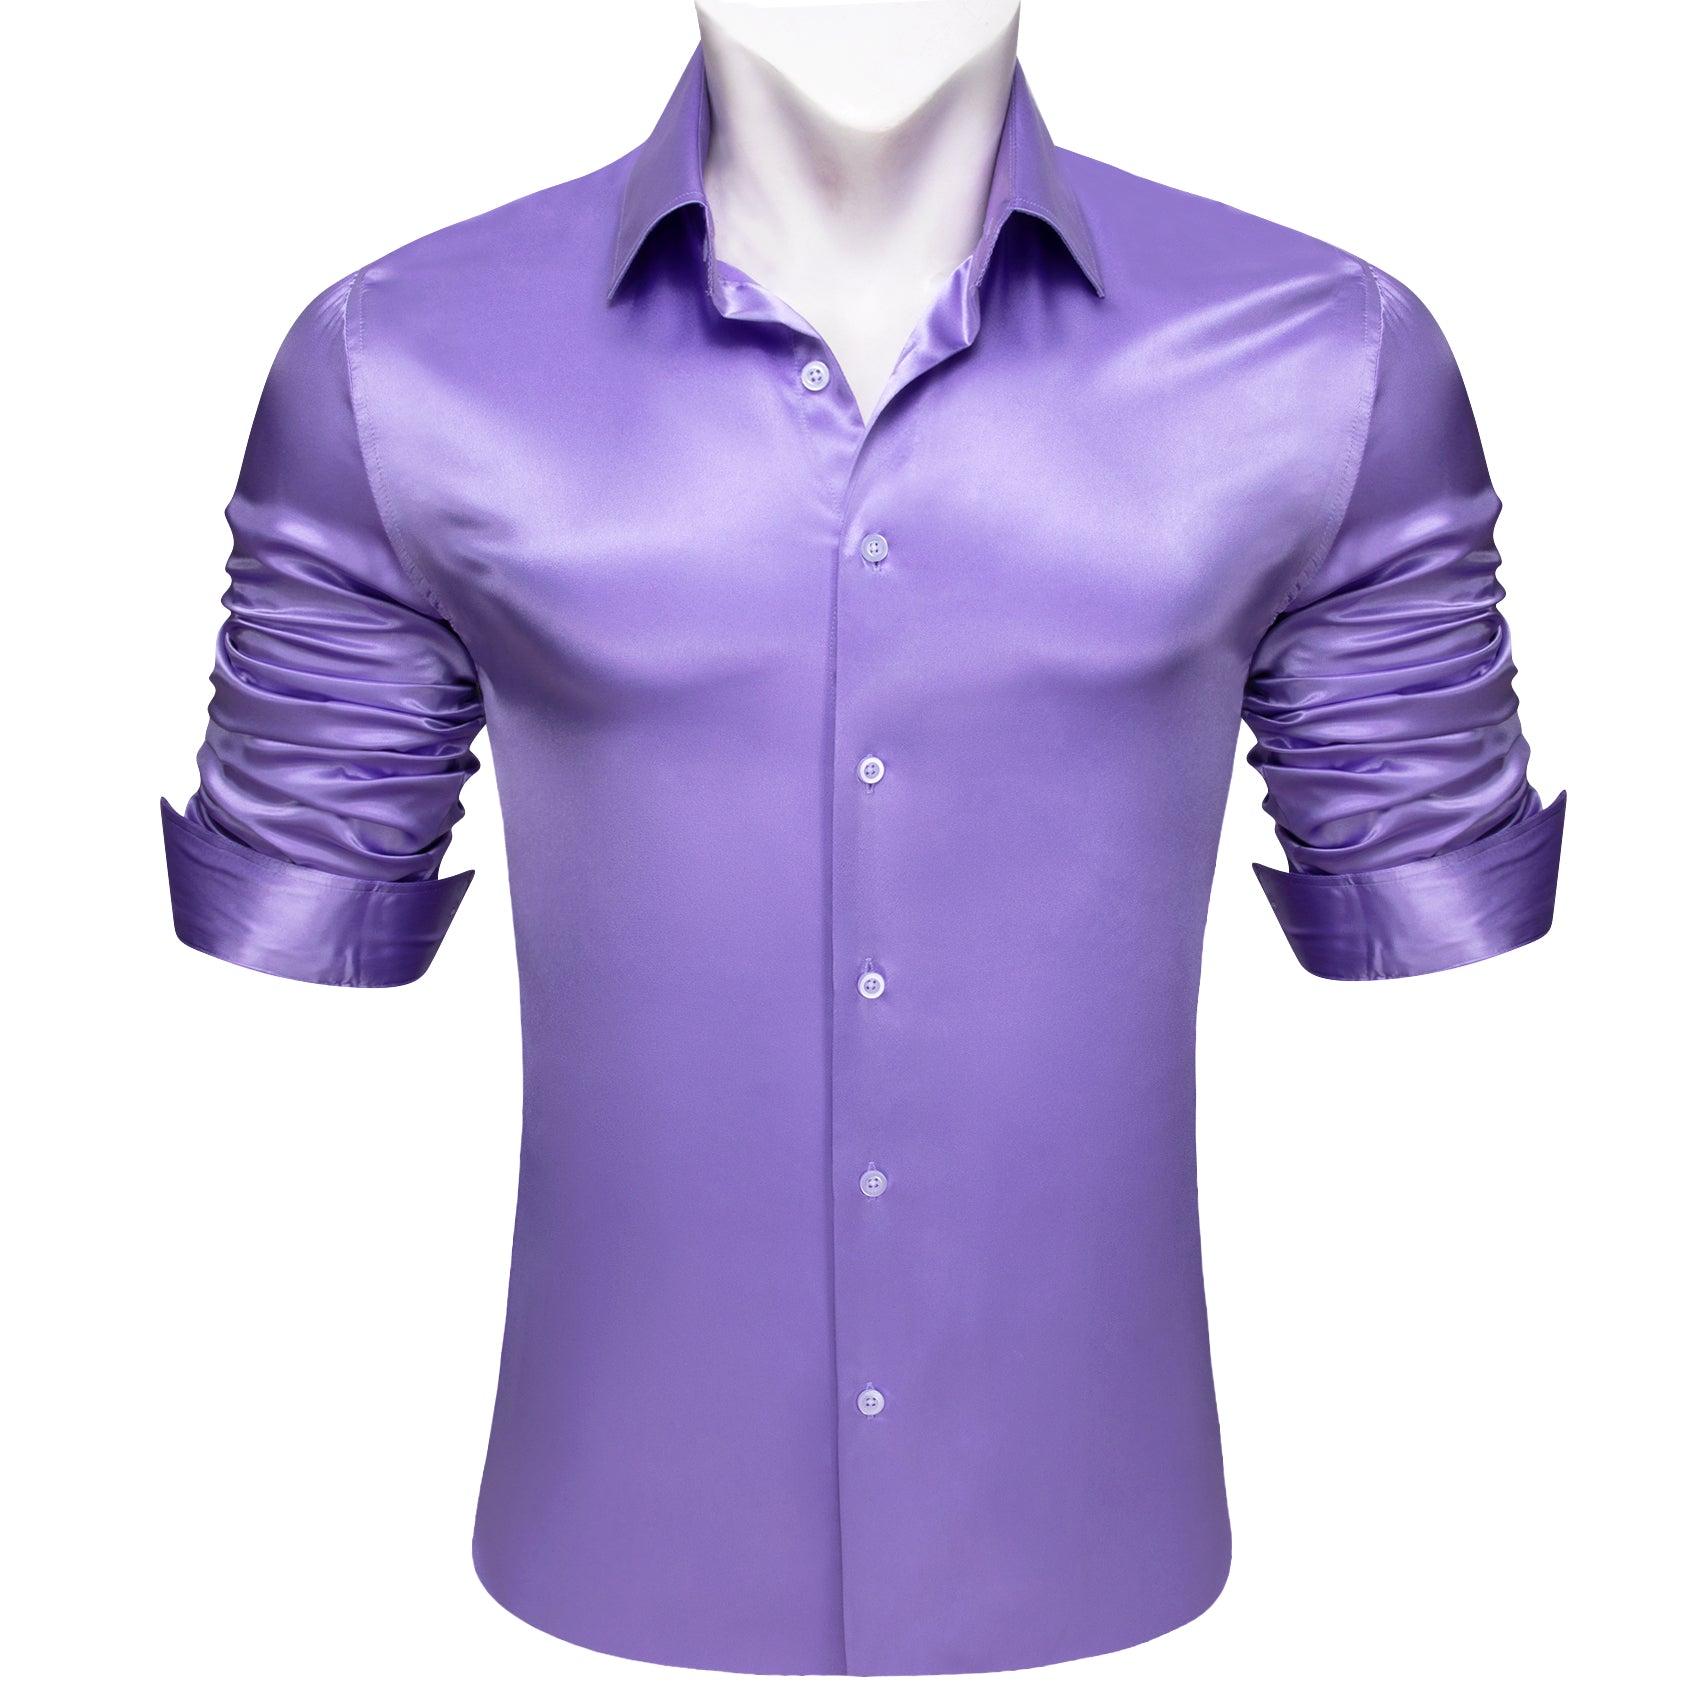 Barry.wang Button Down Shirt Casual Purple Solid Silk Men's Long Sleeve Shirt